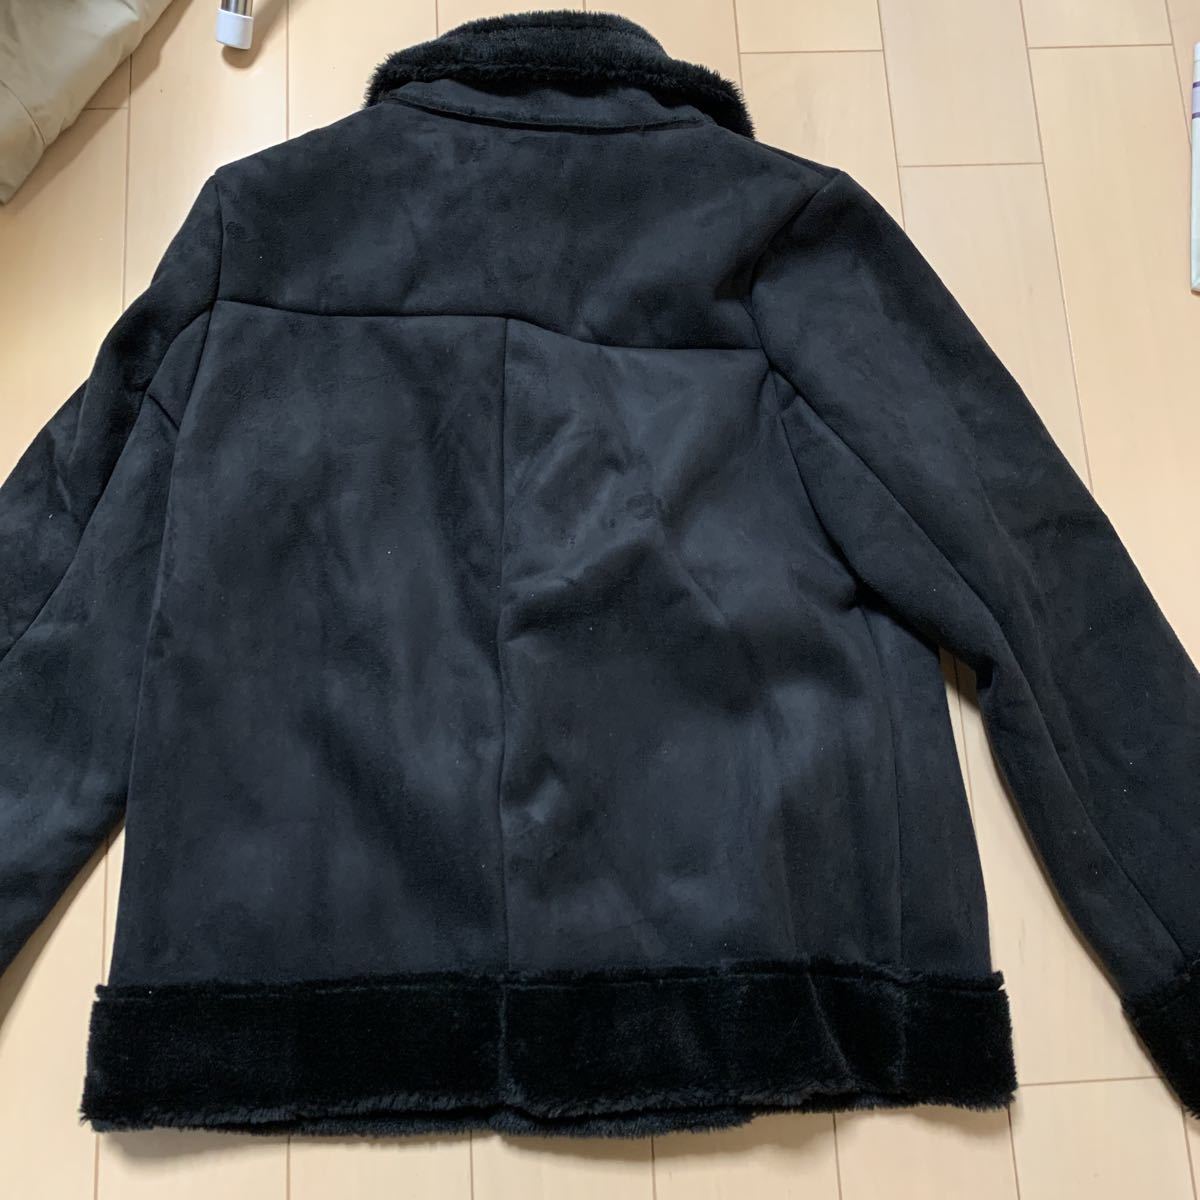  free shipping fake mouton rider's jacket M size black lady's 